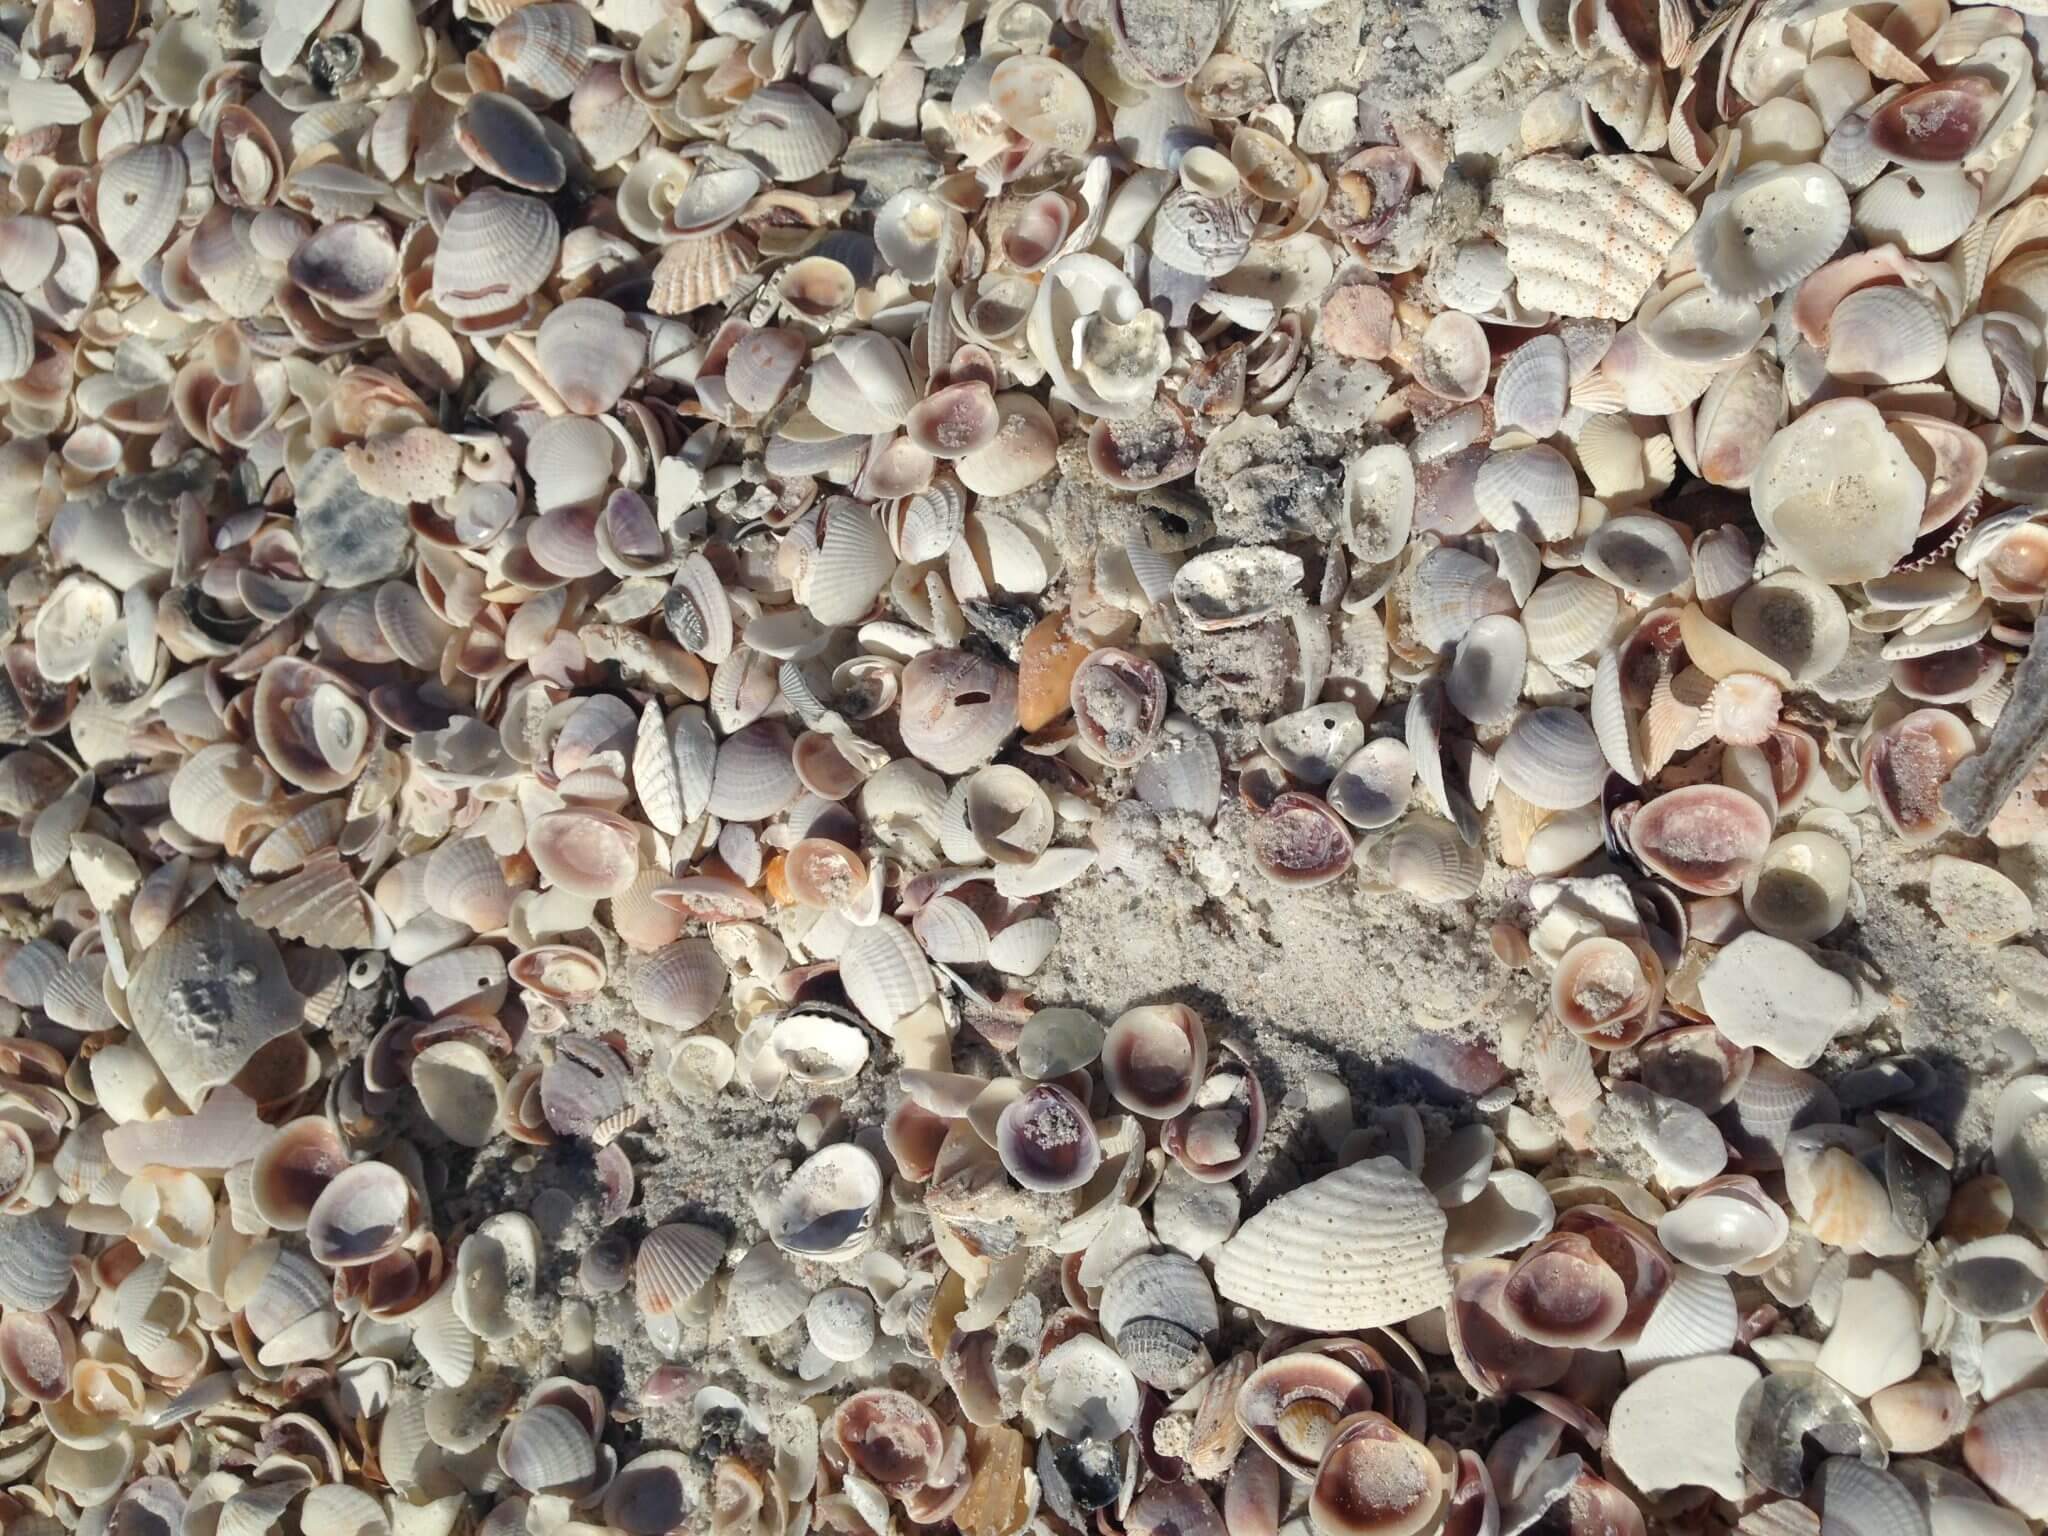 Shells that gather on the shoreline of Treasure Island, Florida.